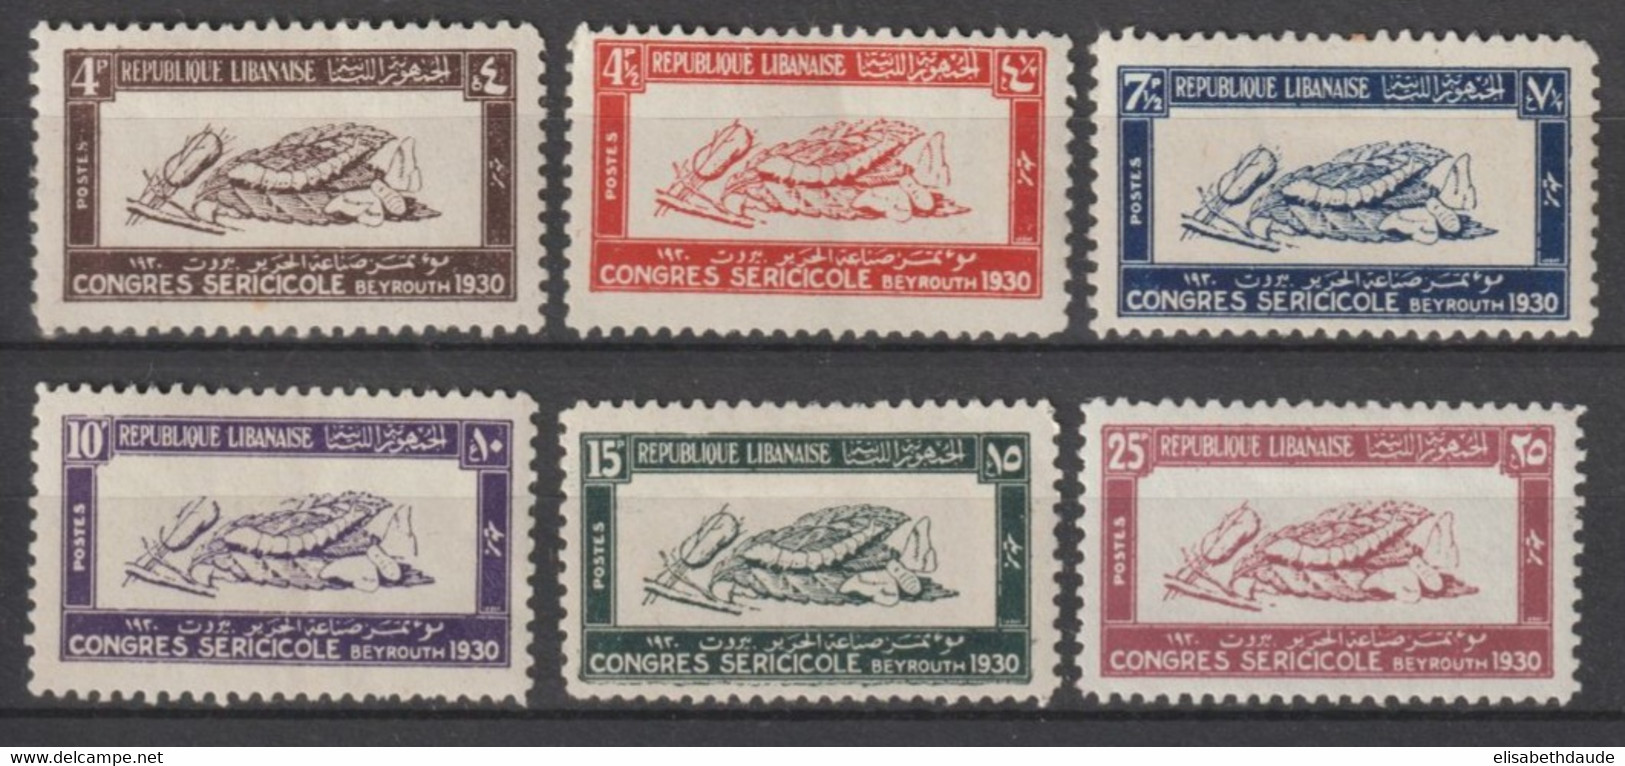 GRAND-LIBAN - 1930 - SERIE COMPLETE CONGRES SERICOLE - YVERT N°122/127 * MH - COTE = 104 EUR. - Nuevos